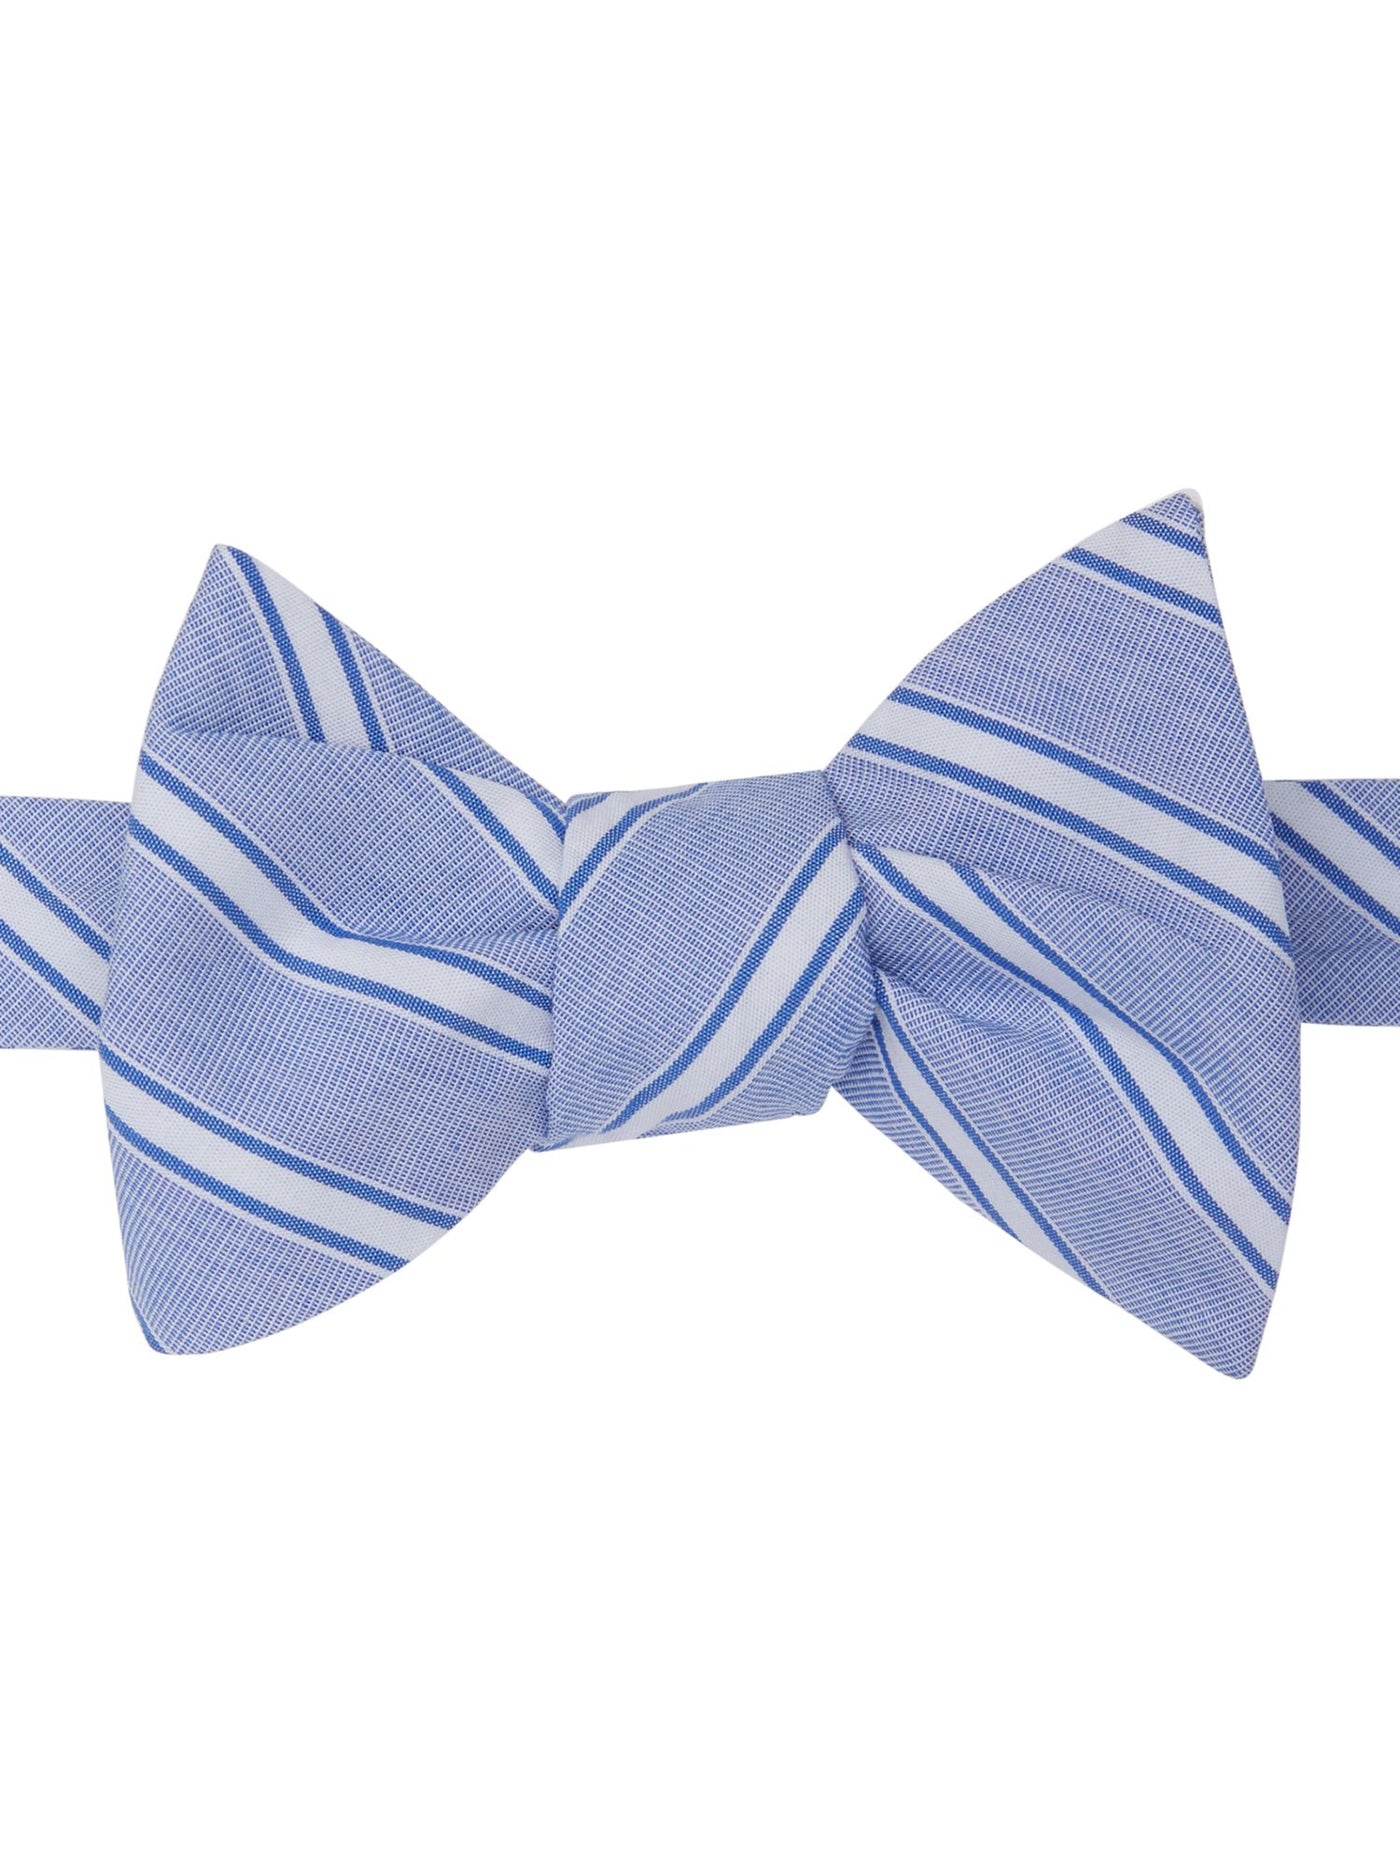 TOMMY HILFIGER Mens Light Blue Stripe To-tie Design Bow Tie